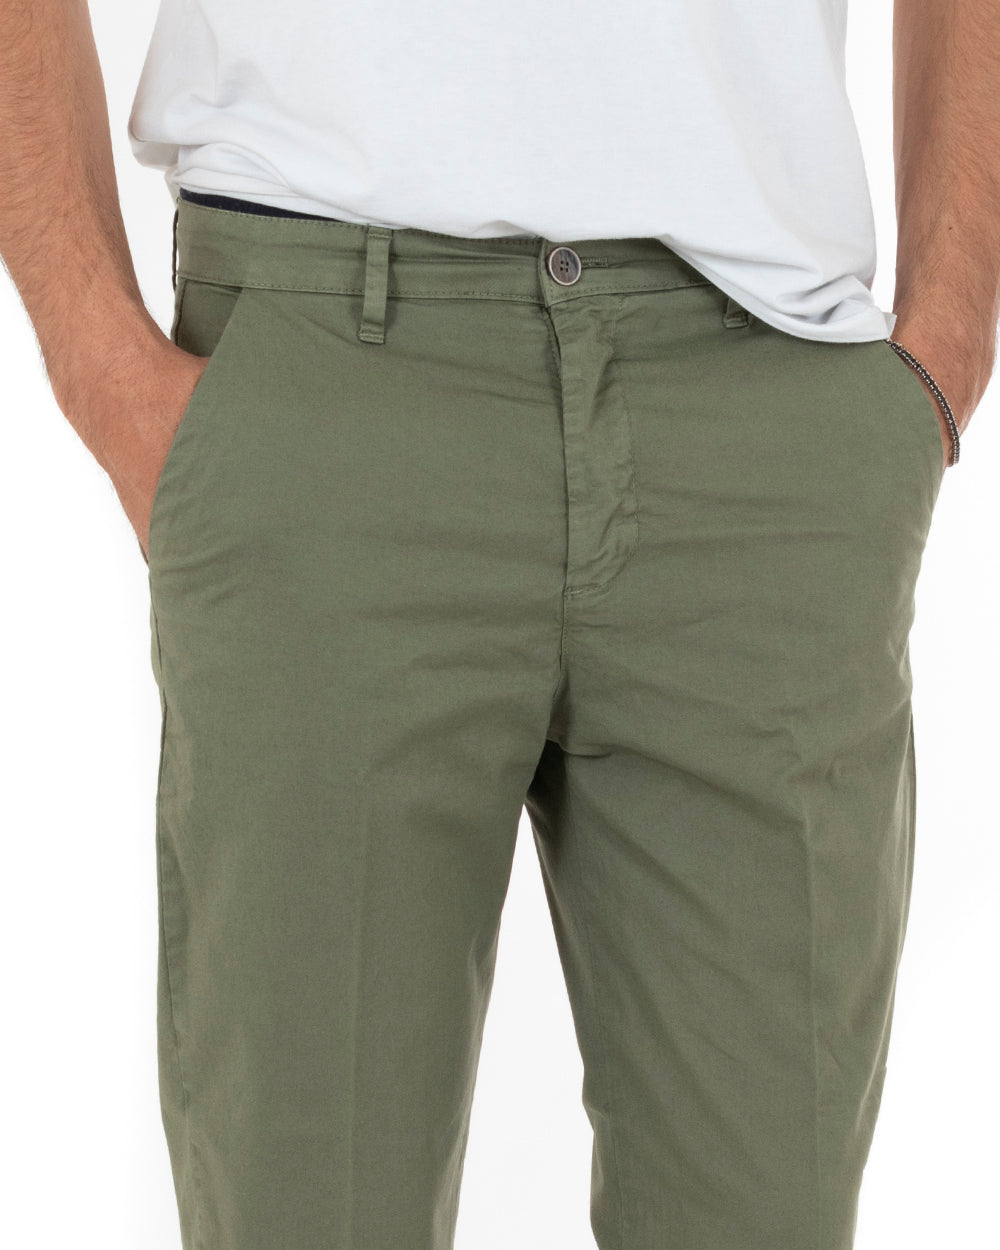 Pantaloni Uomo Cotone Tasca America Capri Sartoriale Slim Verde GIOSAL-P5692A